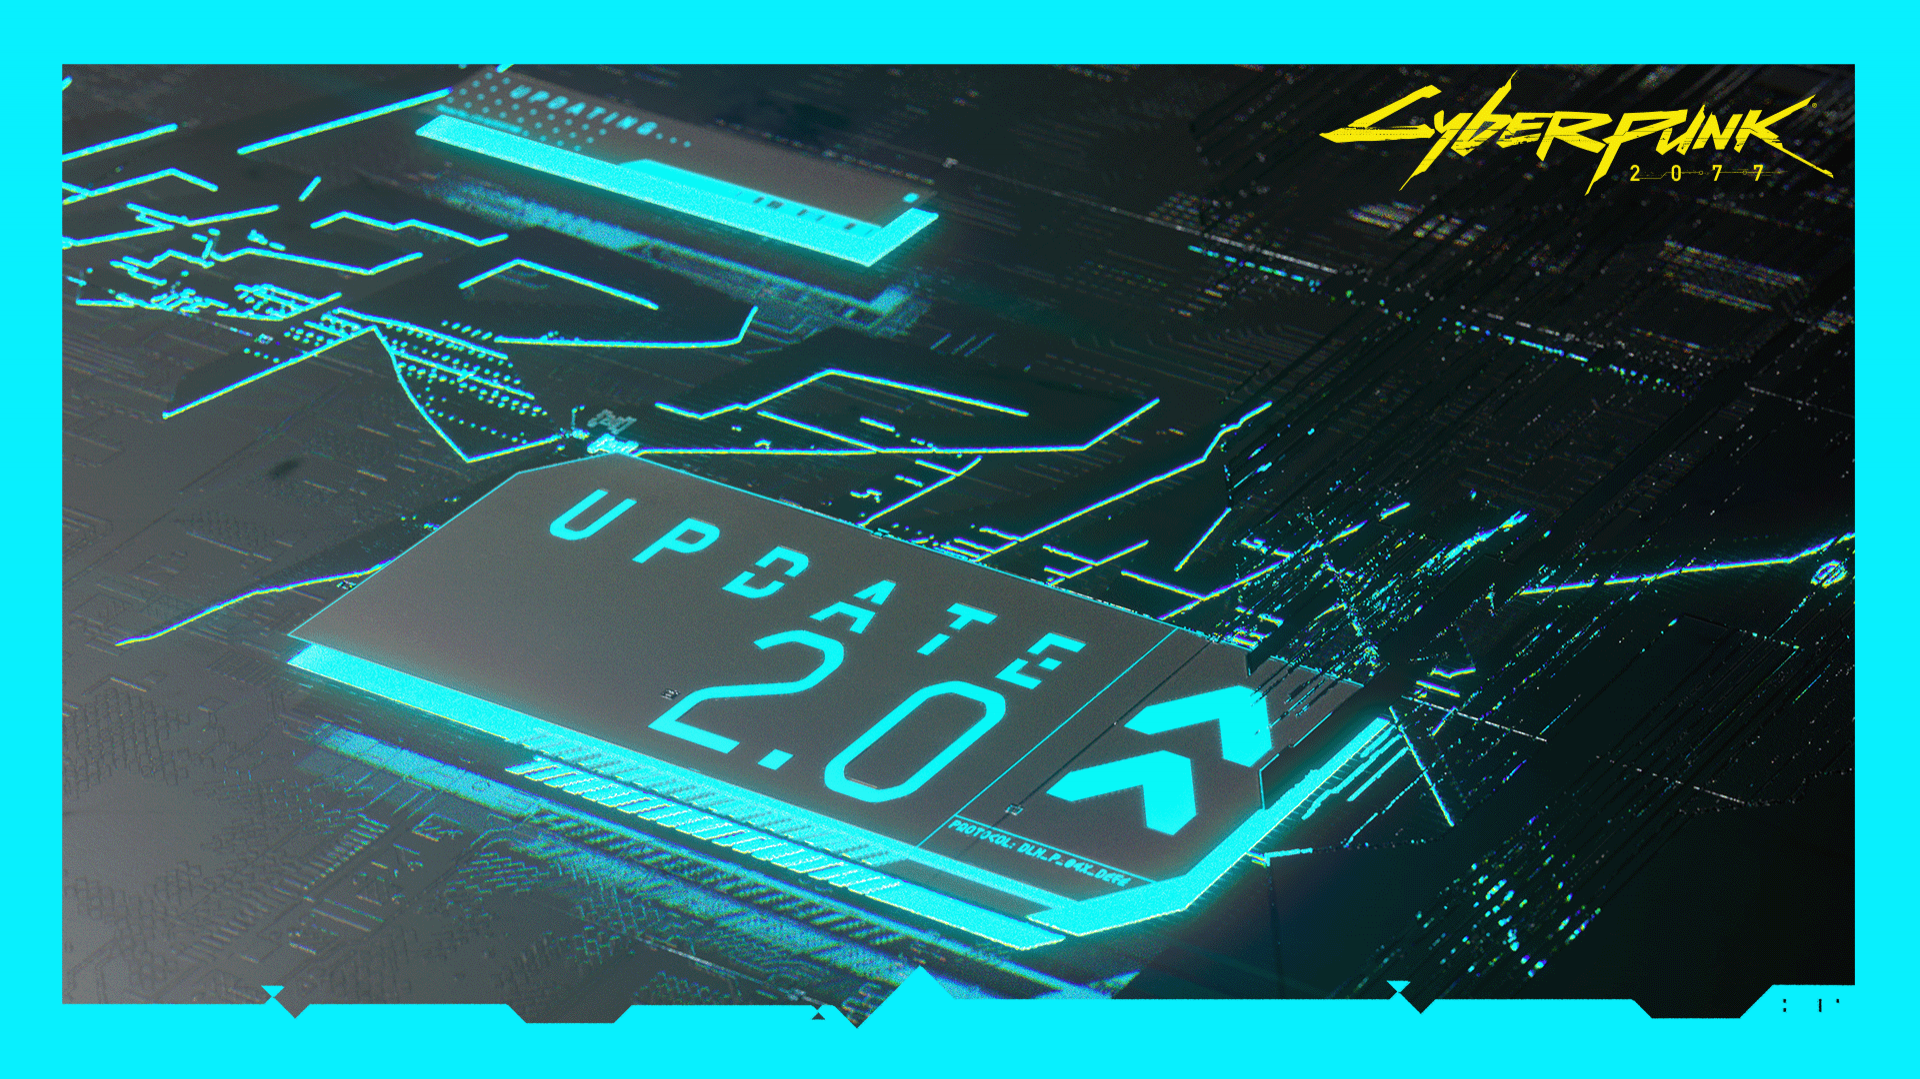 Cyberpunk 2077 Update 2.0 Breakdown, Updates and Changes - News